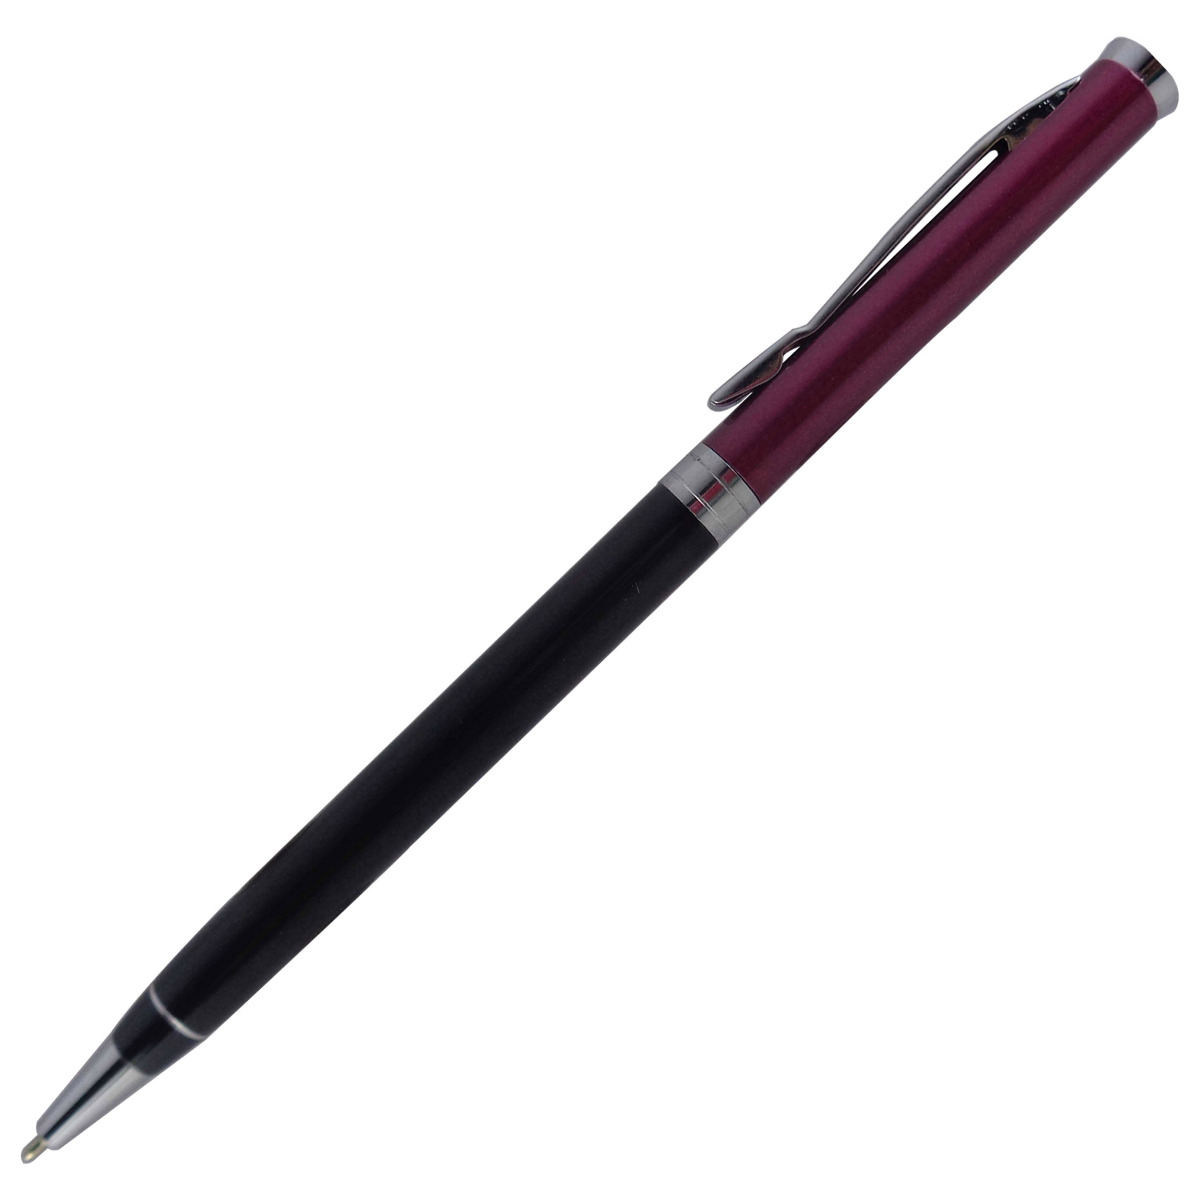 Pierre Cardine Beautiful – Slim Type Black With Pinkish Color Twist Type Ball Pen Model: 13495